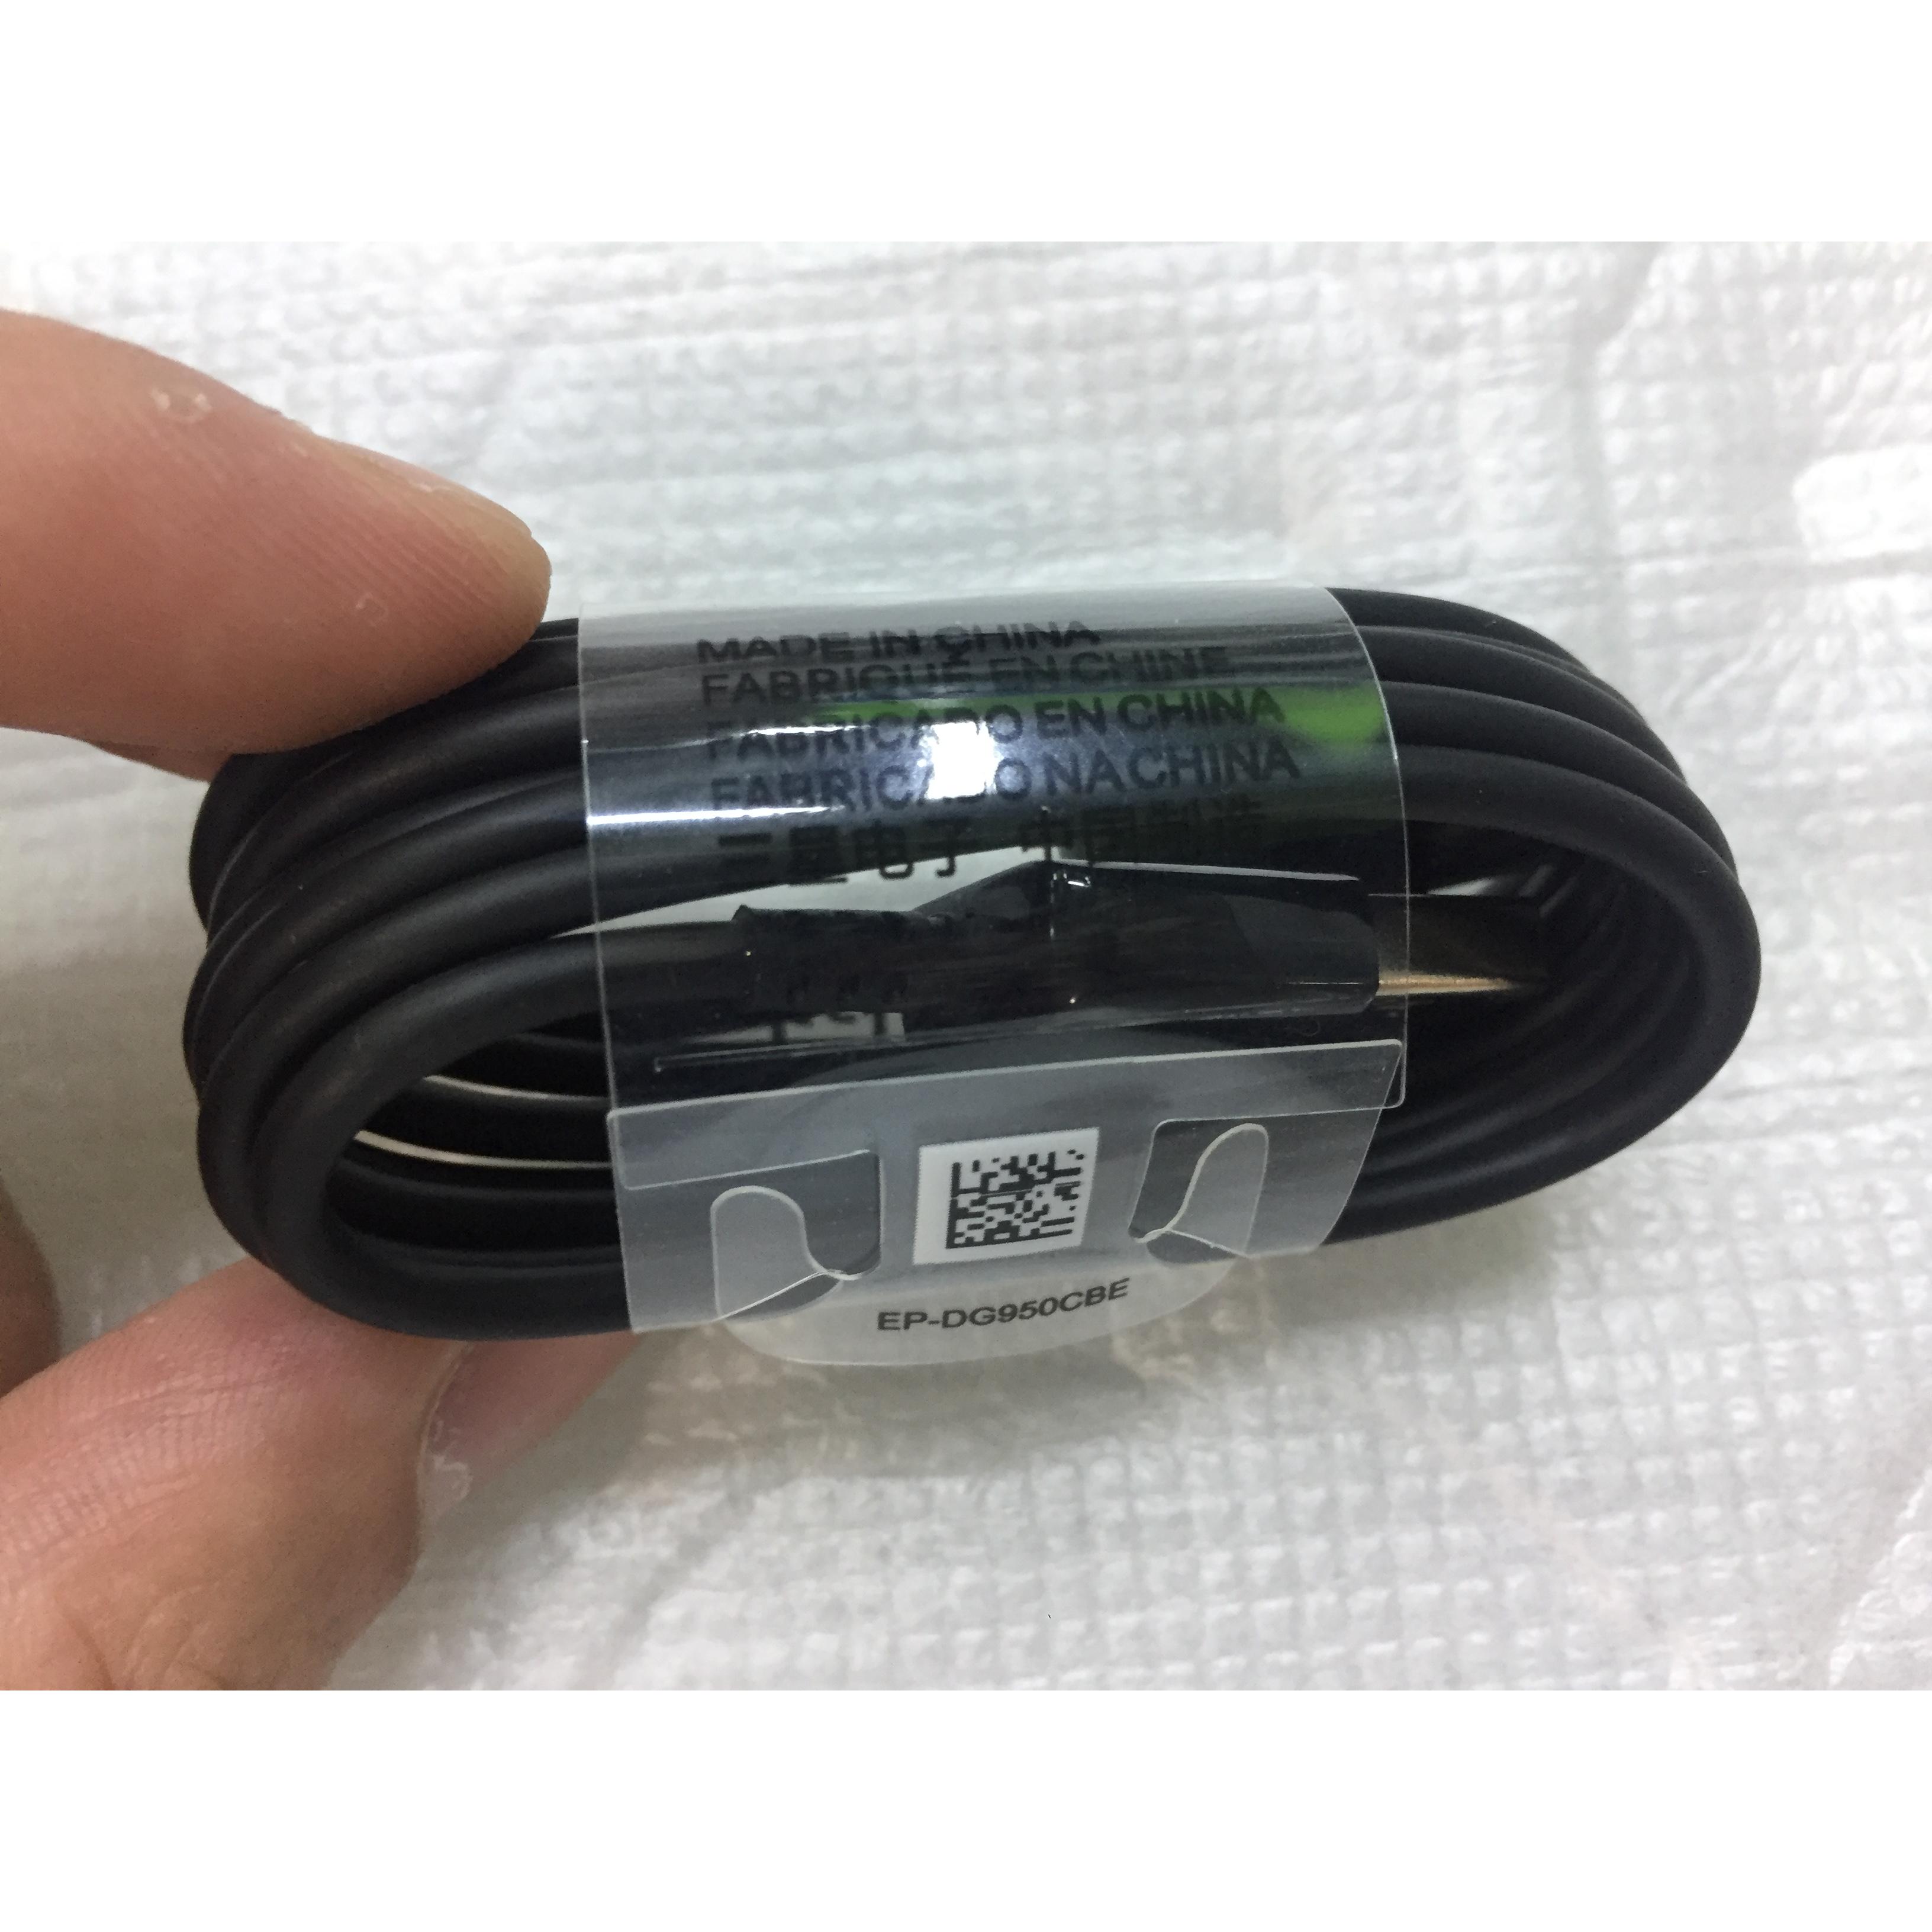 Samsung EP-DG950CBE S8 Cable Wholesale Suppliers